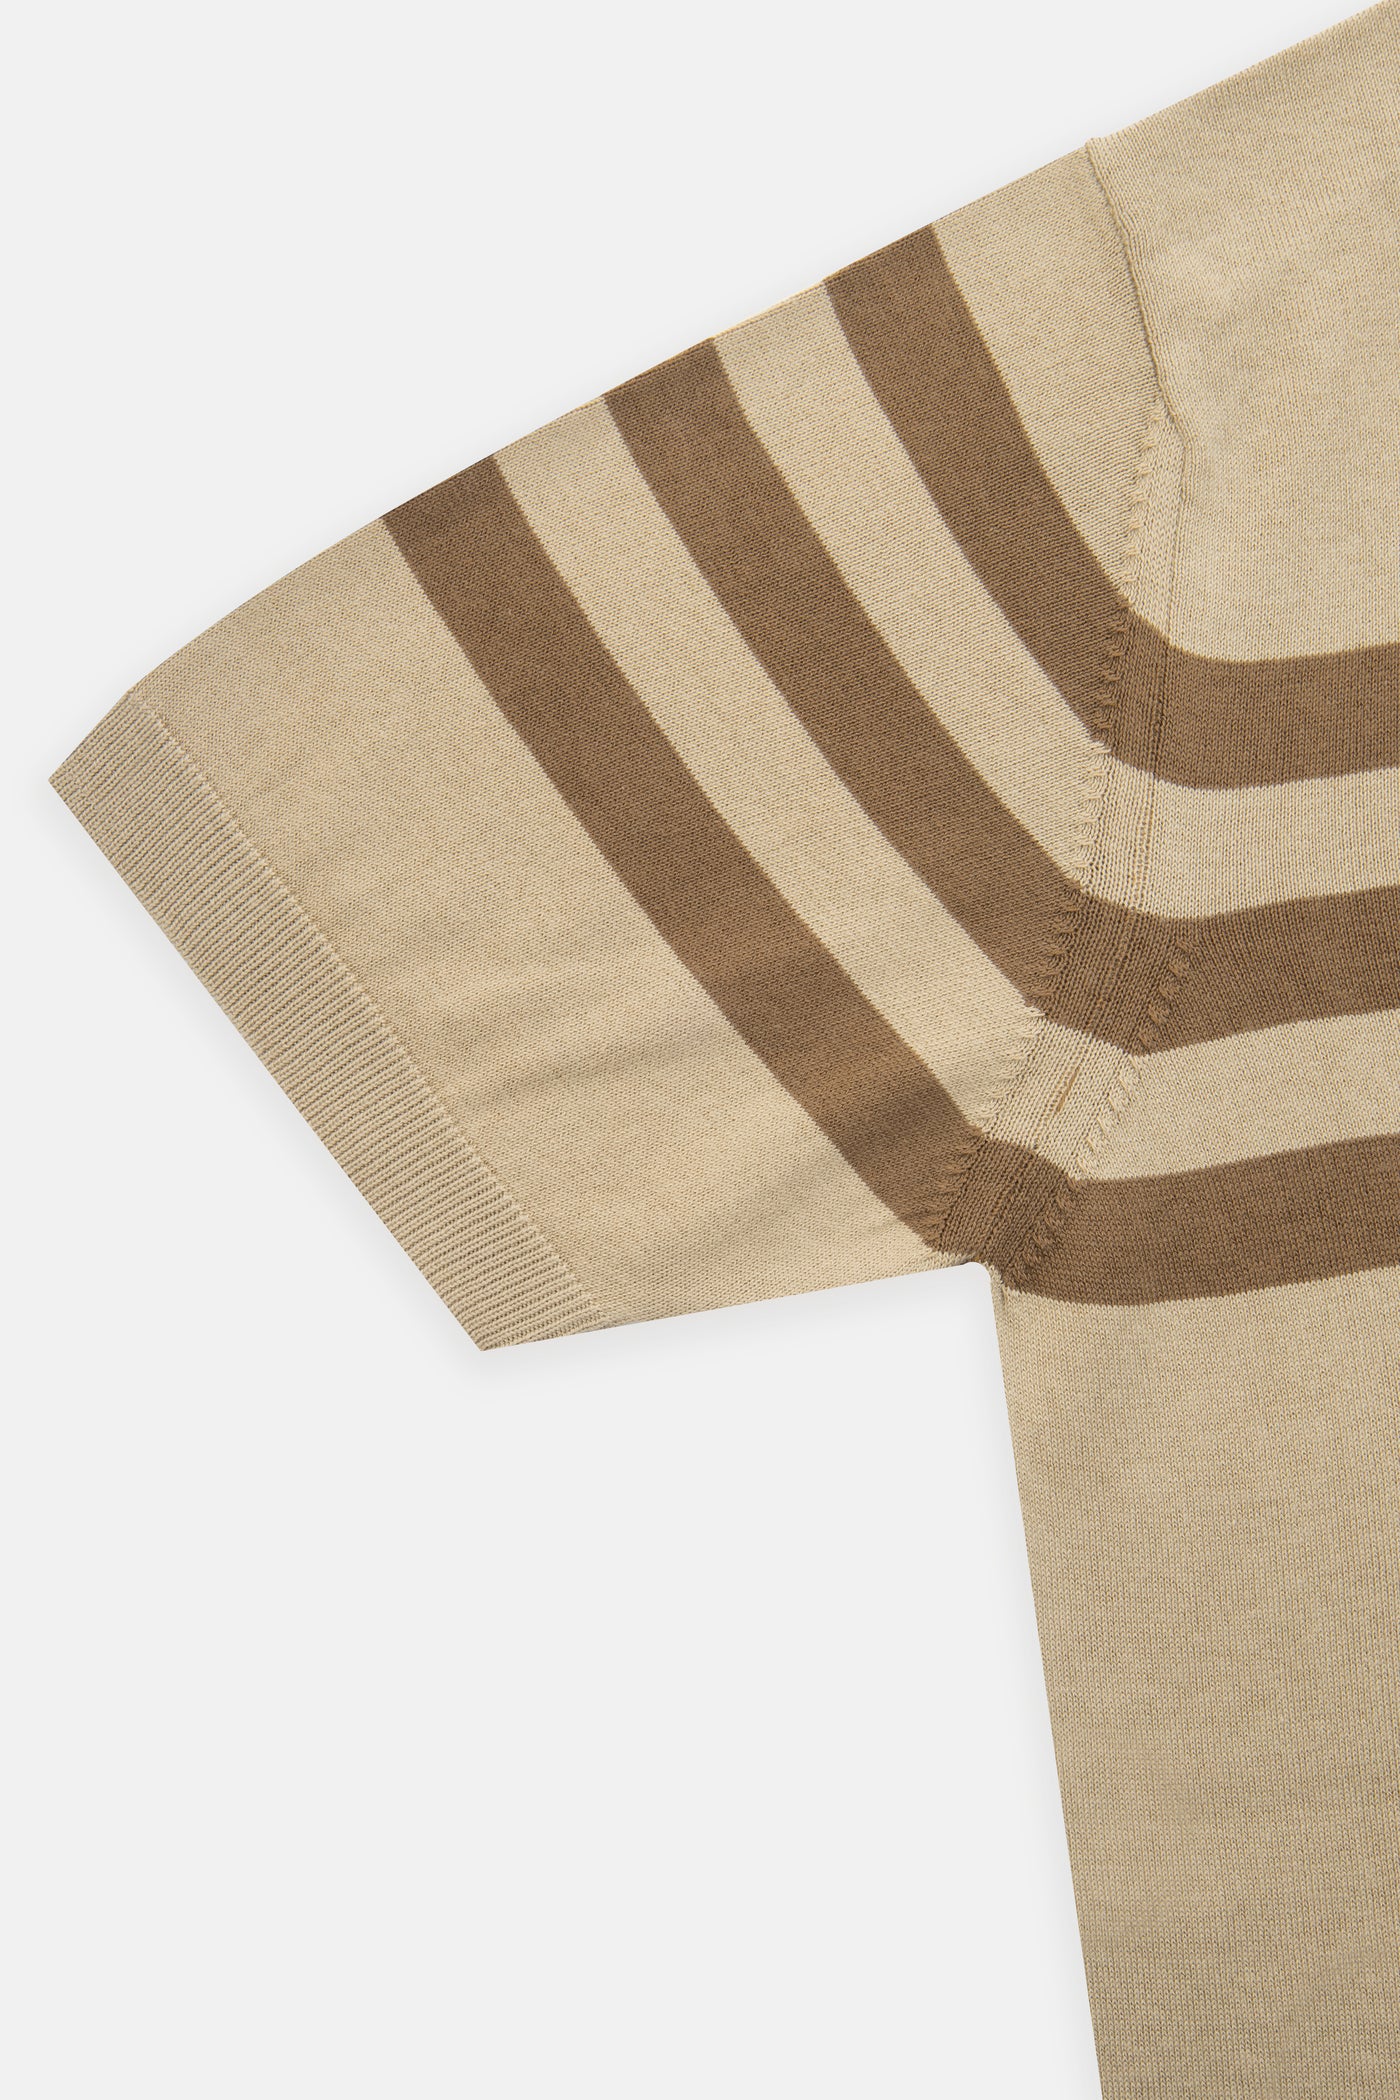 Striped Light Beige & Brown Knitted  Round T-Shirt